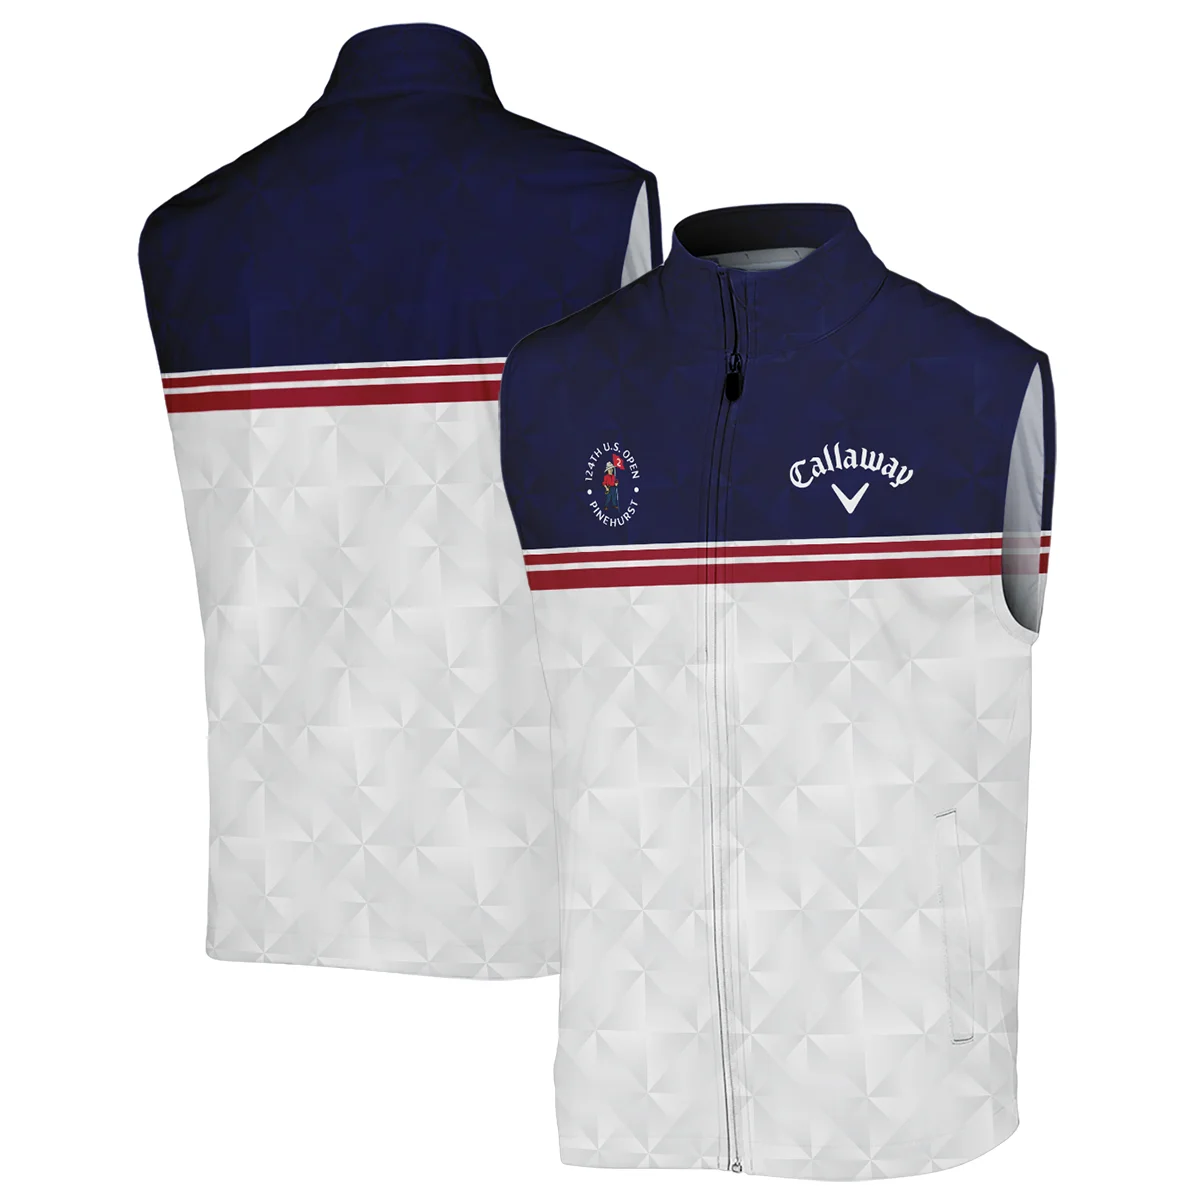 Golf Sport 124th U.S. Open Pinehurst Callaway Bomber Jacket Dark Blue White Abstract Geometric Triangles All Over Print Bomber Jacket